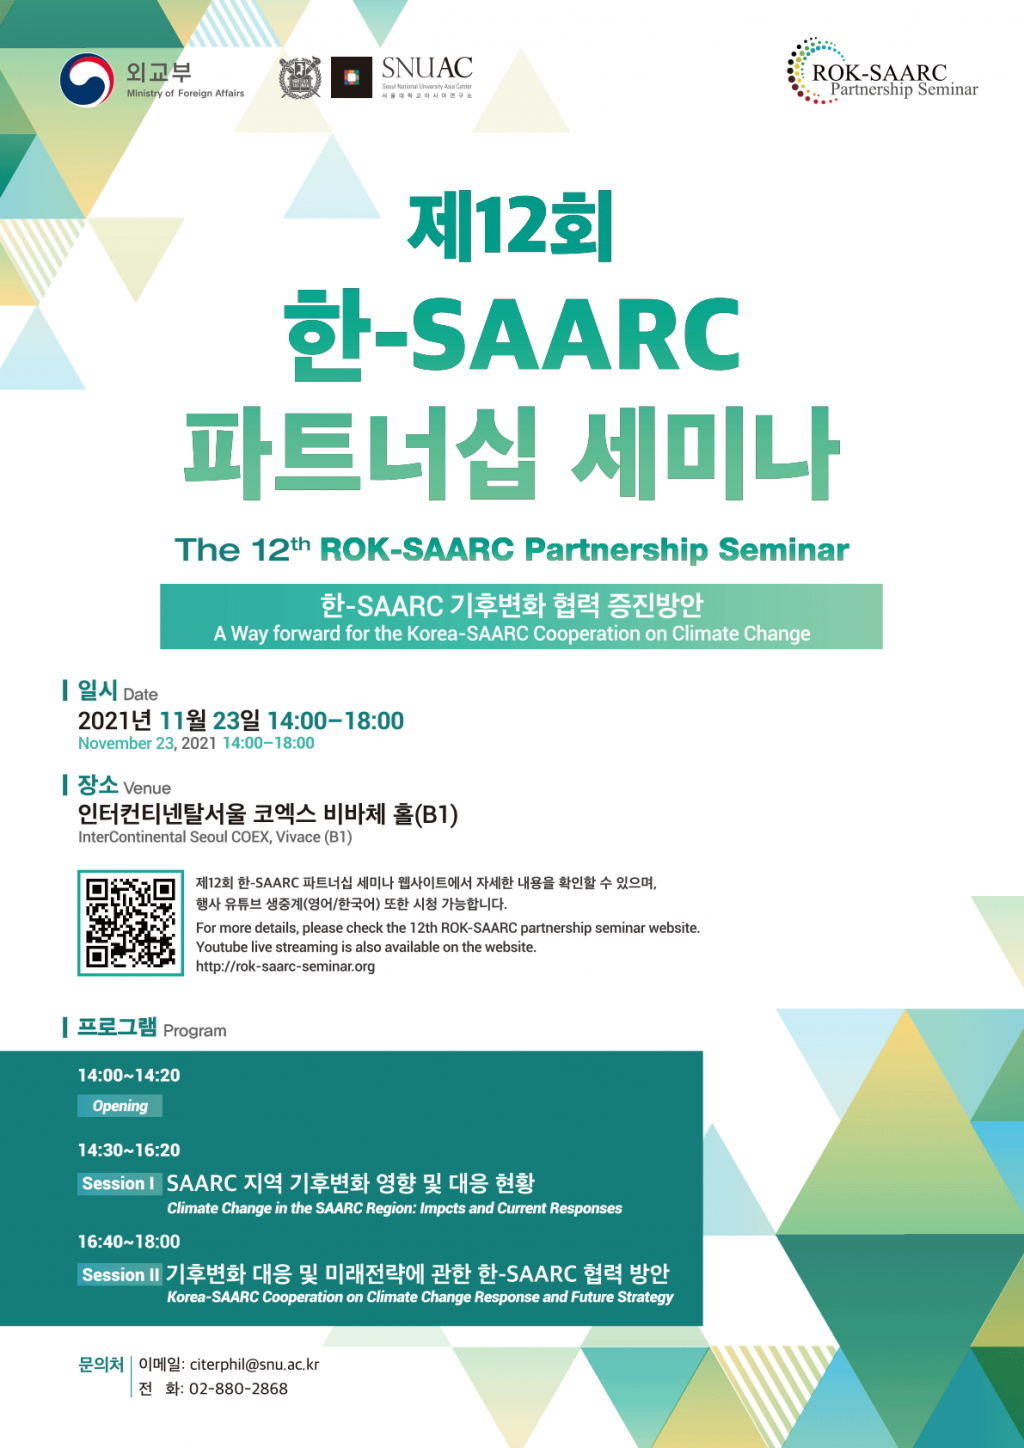 The 12th ROK-SAARC Partnership Seminar